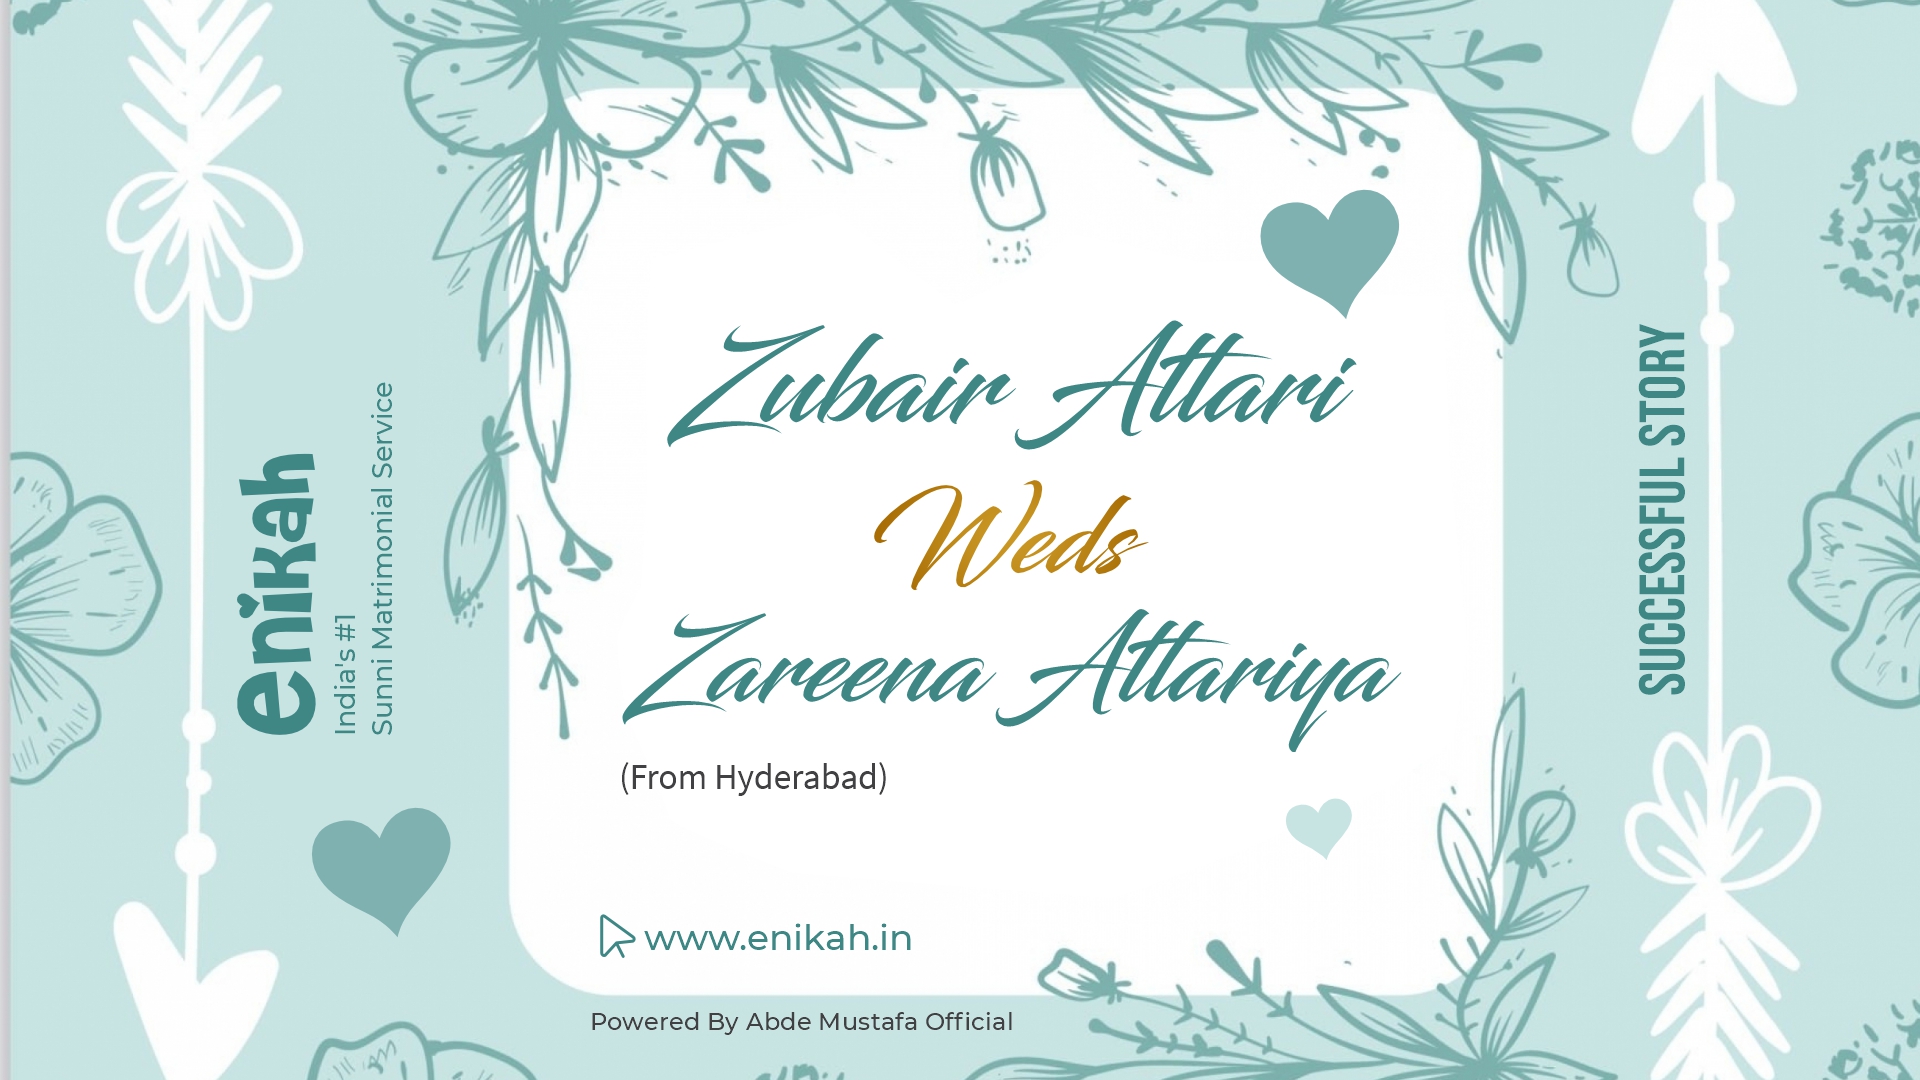 Zubair Attari Weds Zareena Attariya